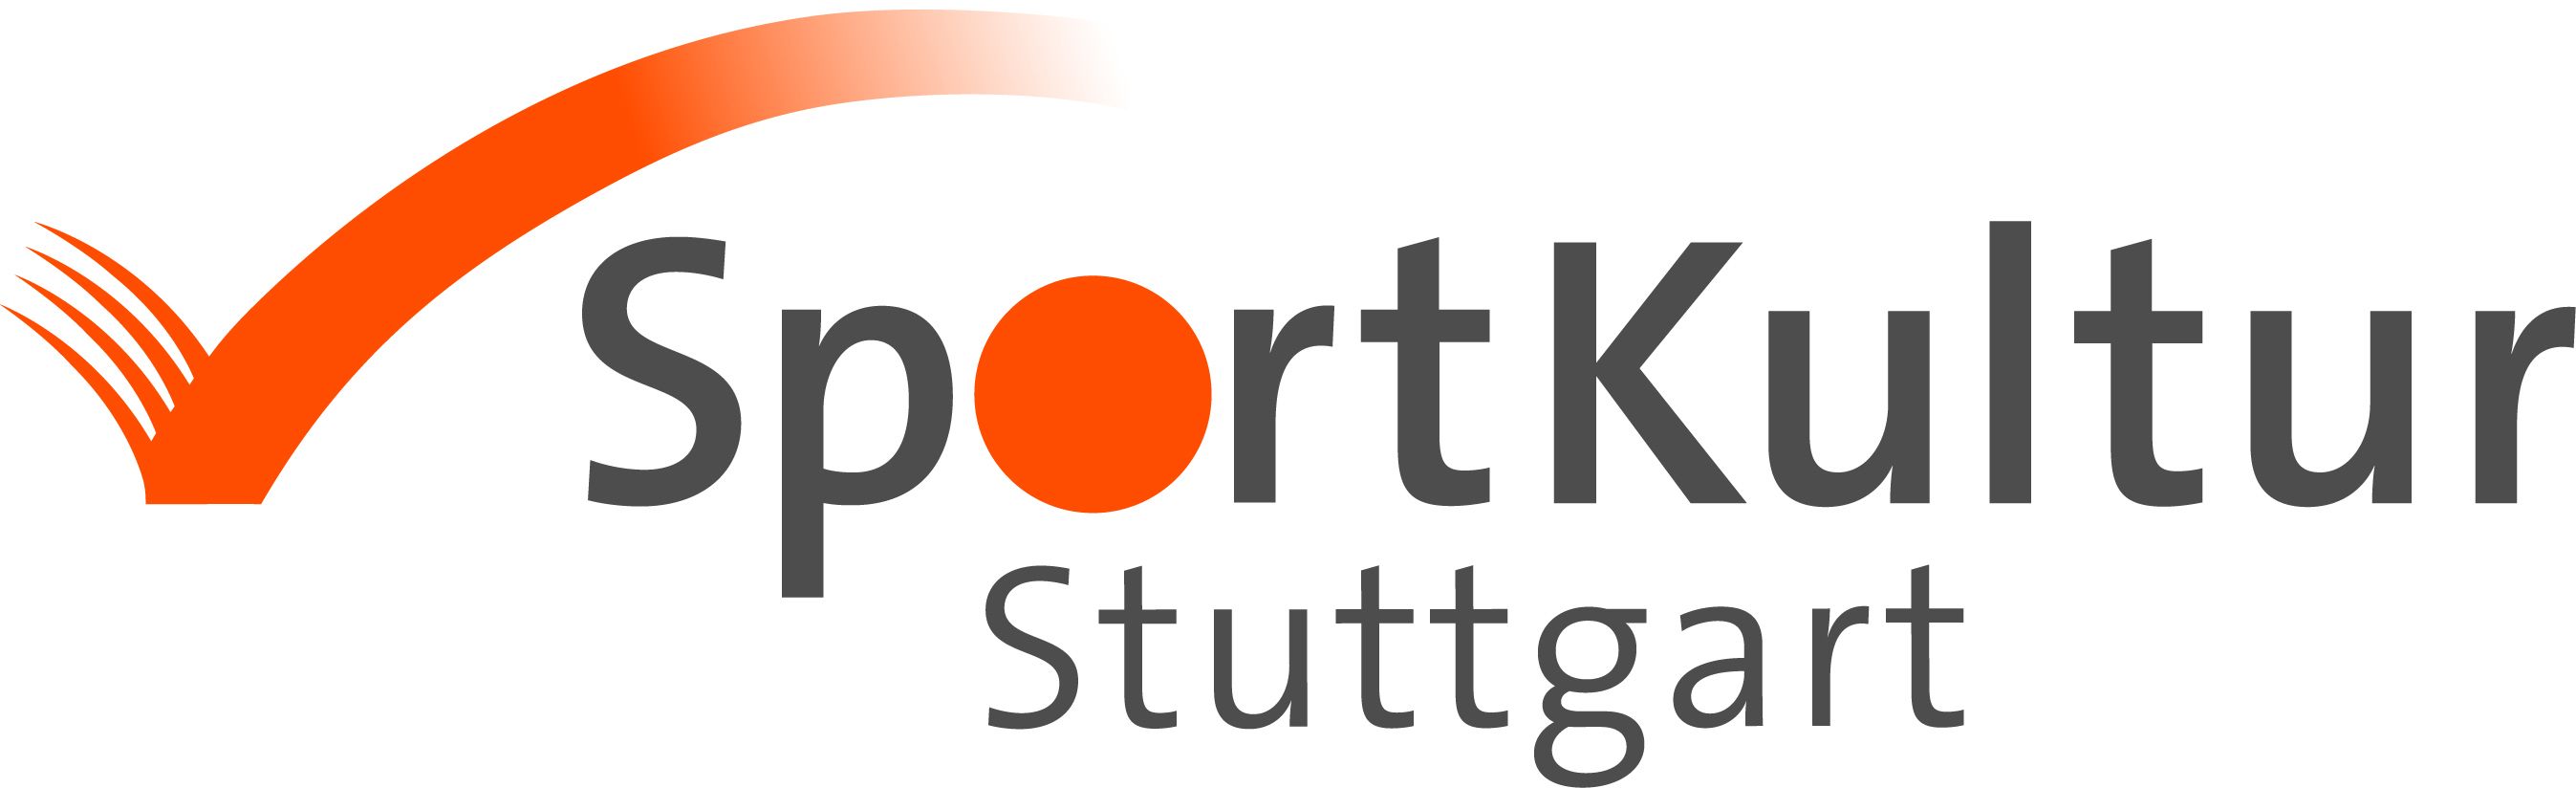 SportKultur Stuttgart e.V.